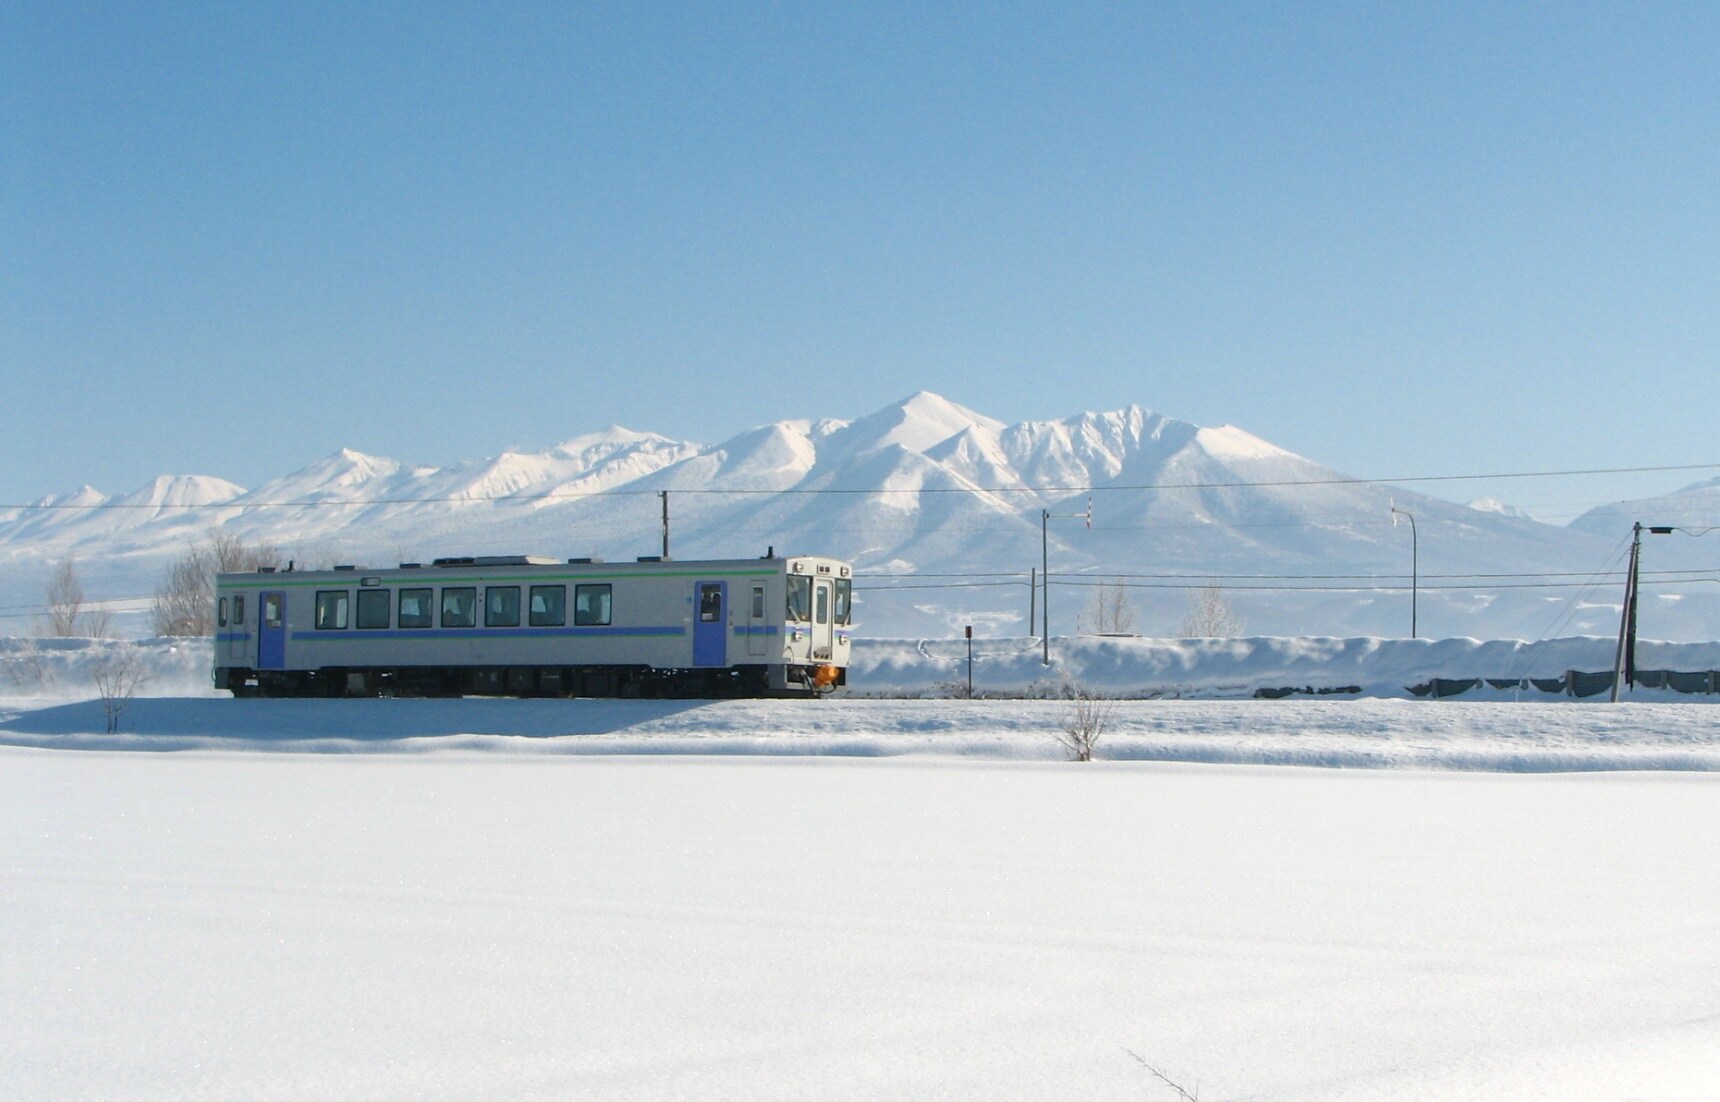 From Kansai to Hokkaido on Public Transport